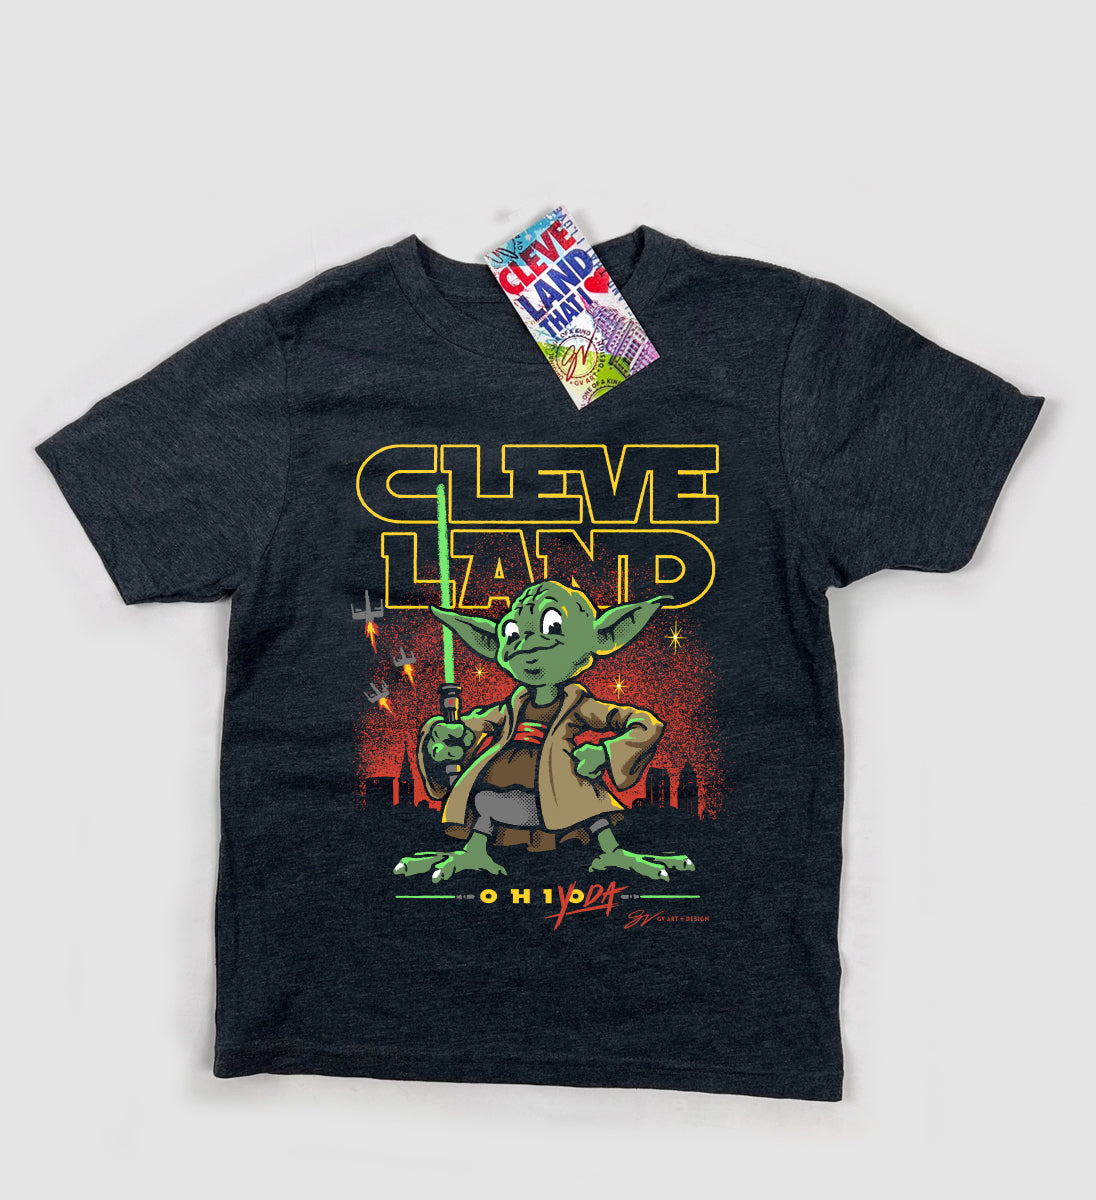 Kids Team Cleveland Forces Aligned T Shirt